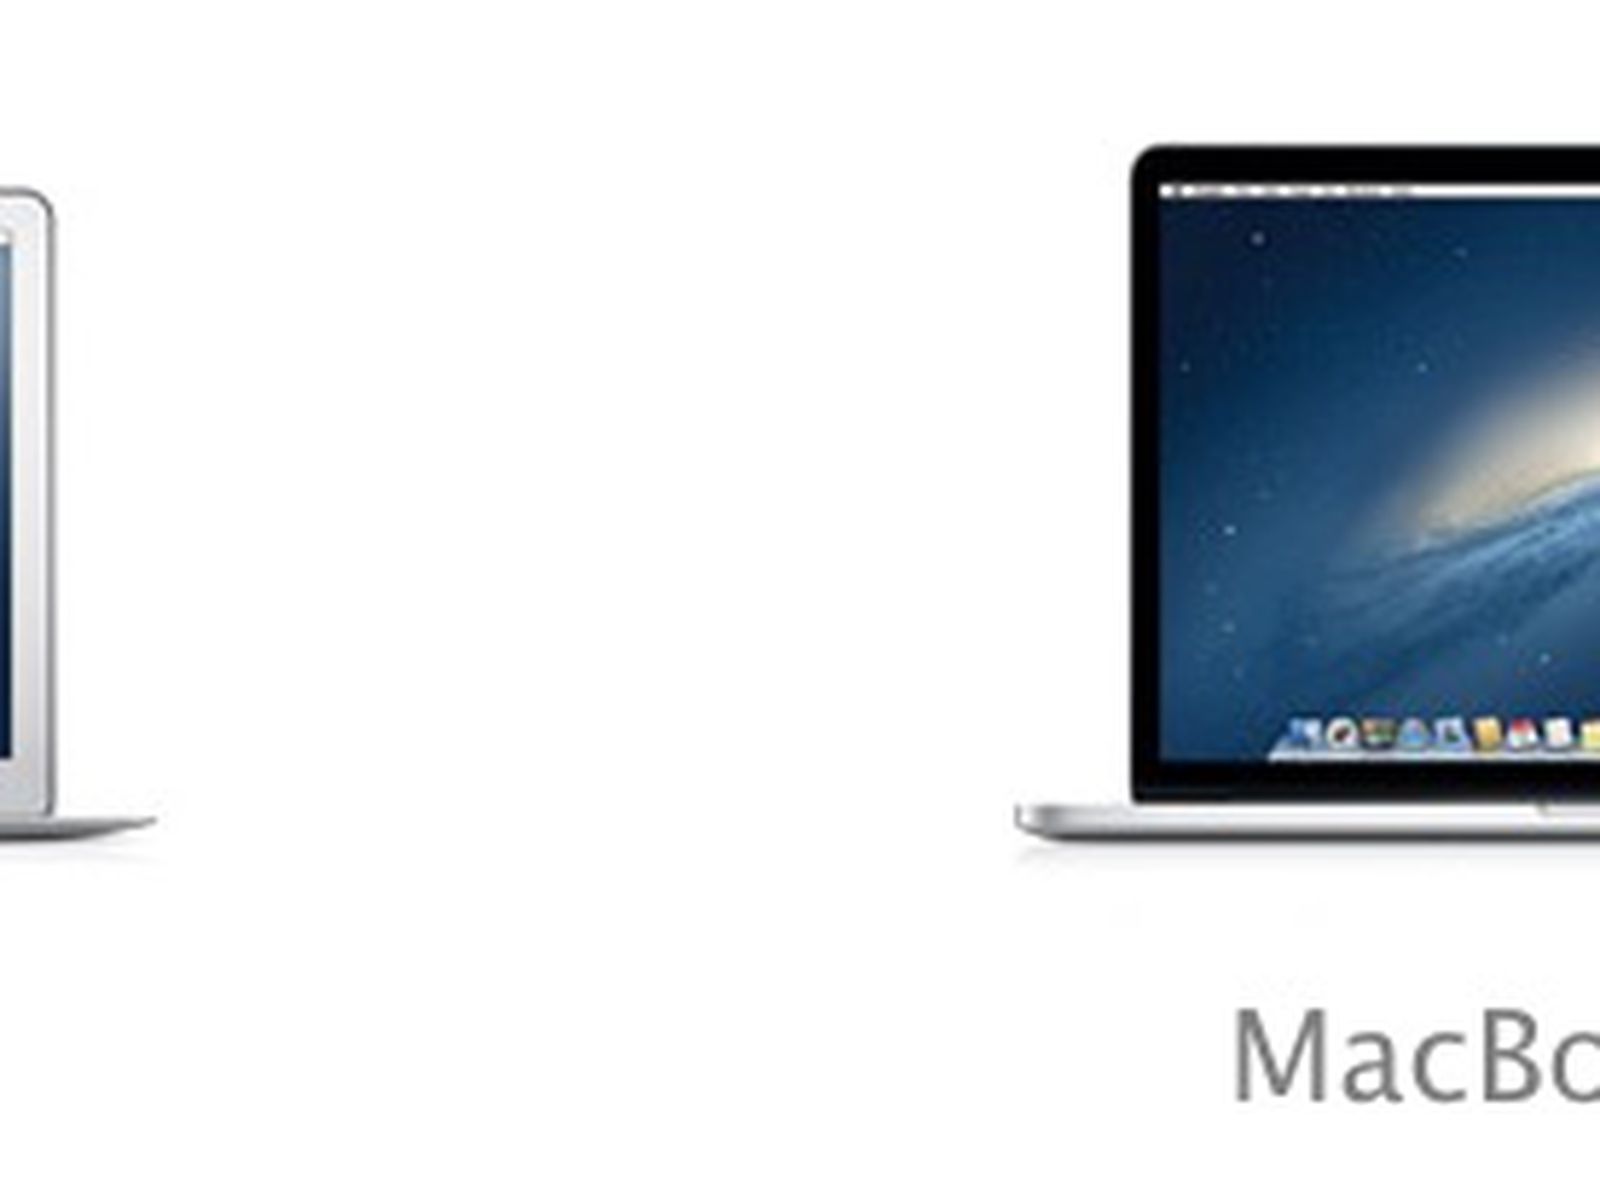 Pricing Leak Suggests Macbook Air Release At Wwdc Retina Macbook Pro Update Shipping Later Macrumors